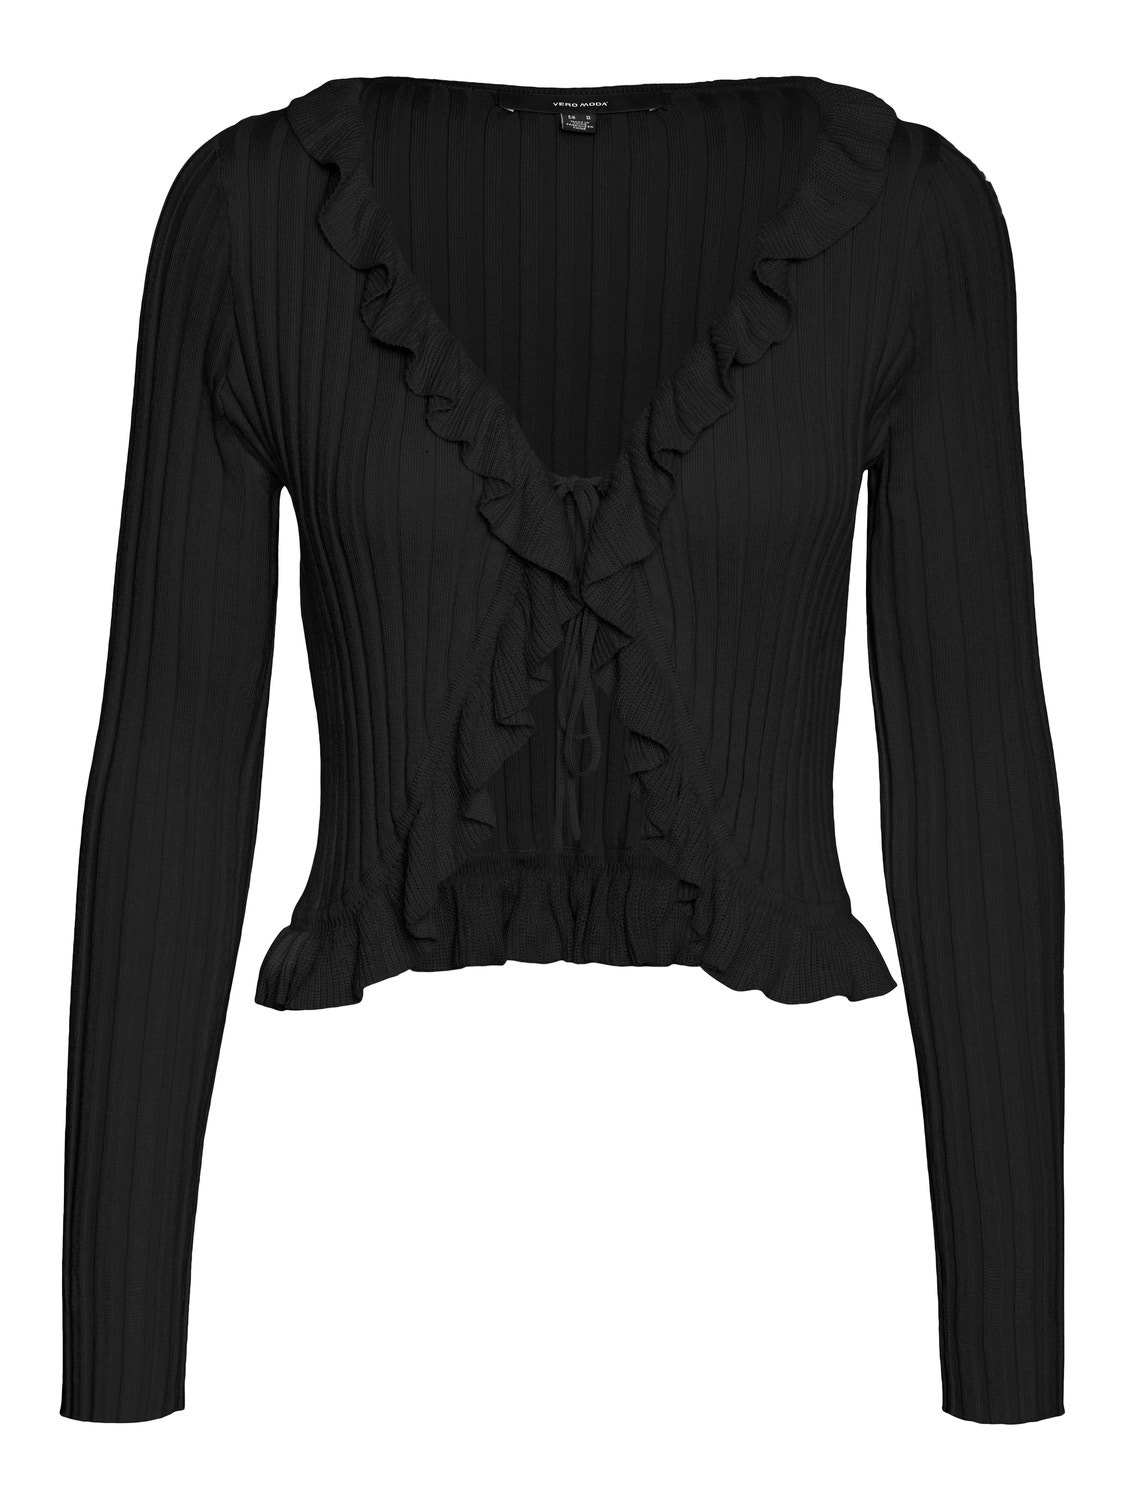 Vero Moda VMPROVENCE Knit Cardigan -Black - 10302967